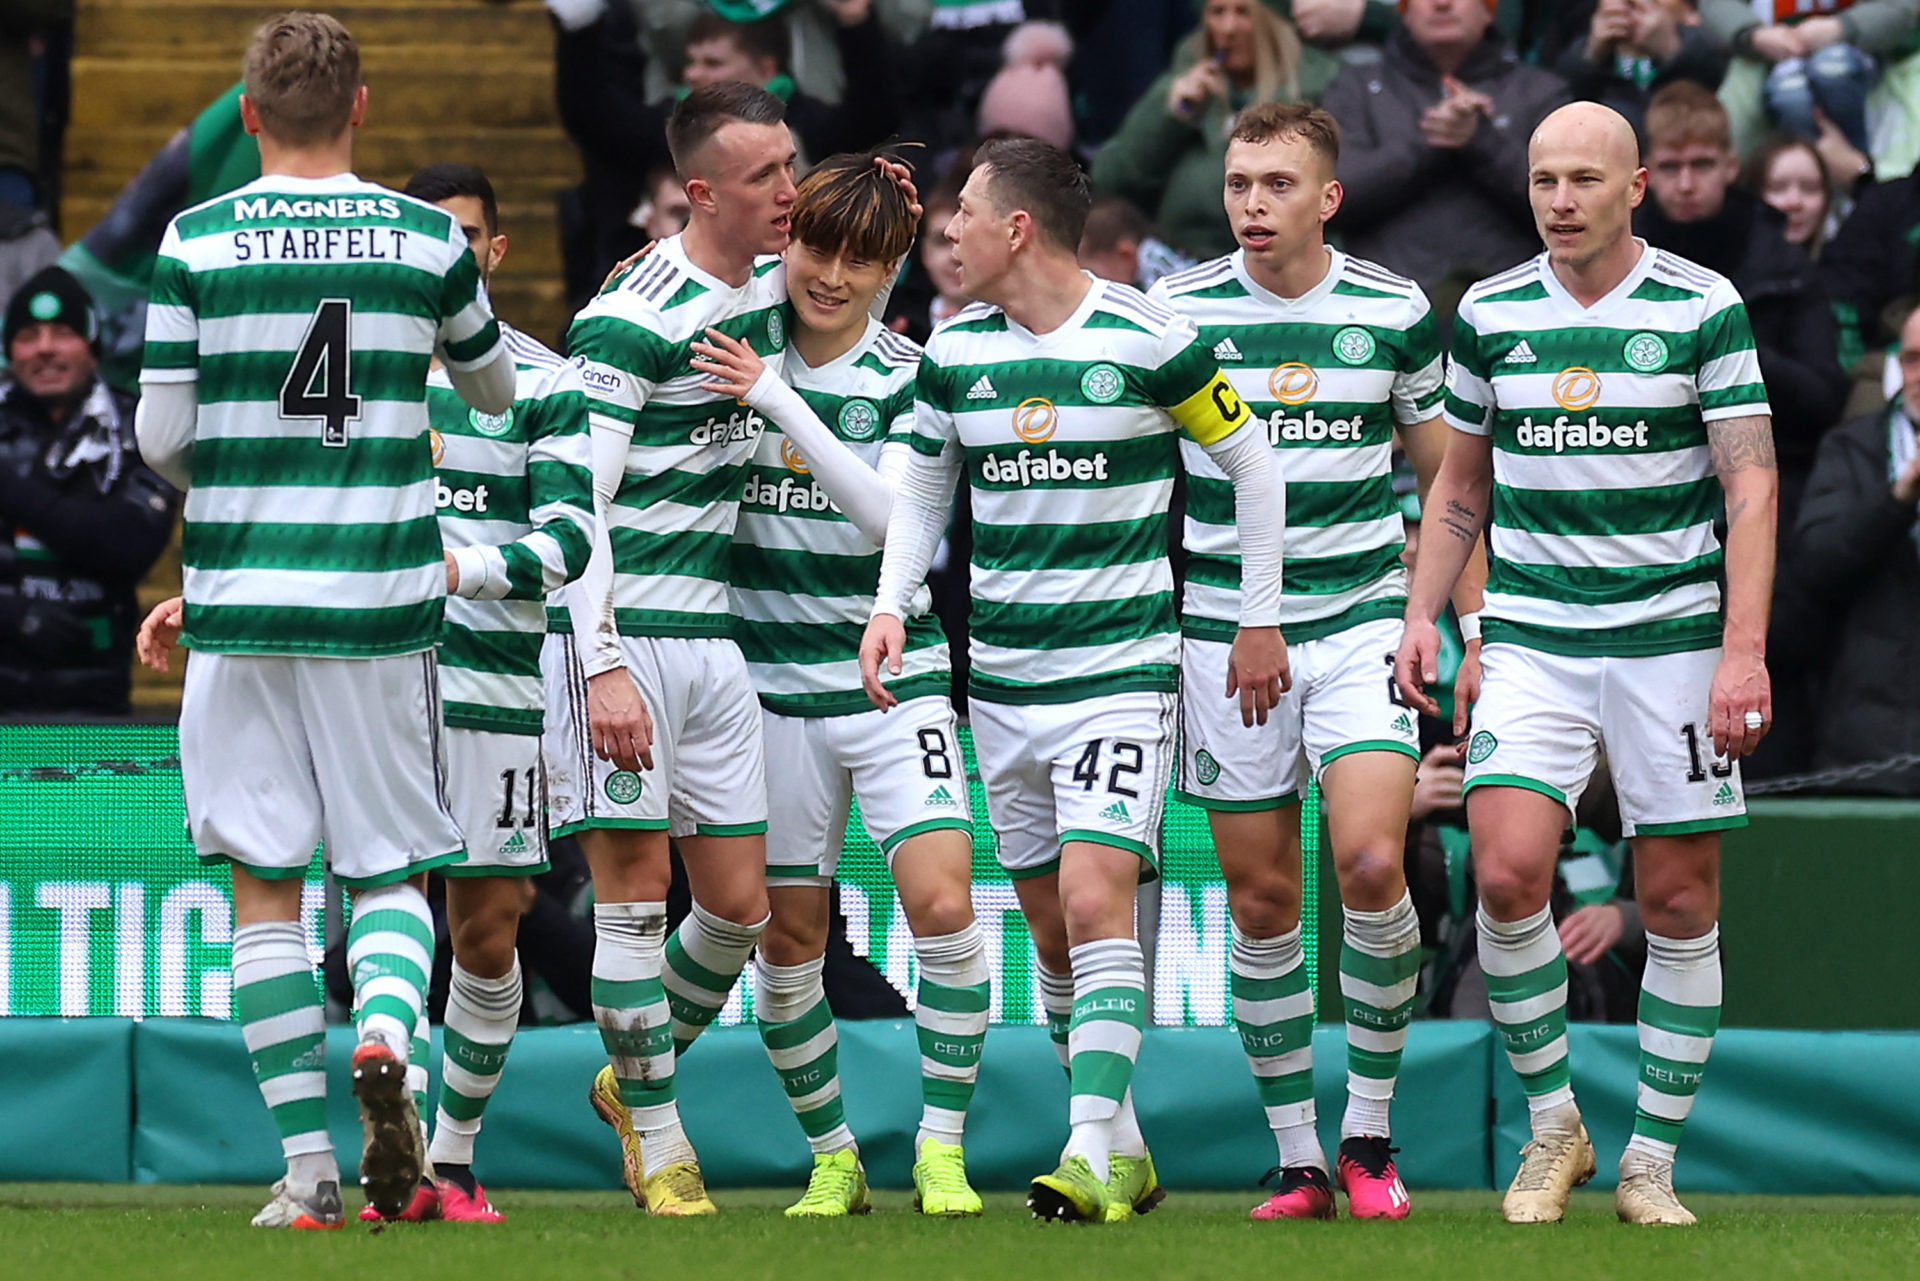 The Celtic players celebrate a goal against Greenock Morton